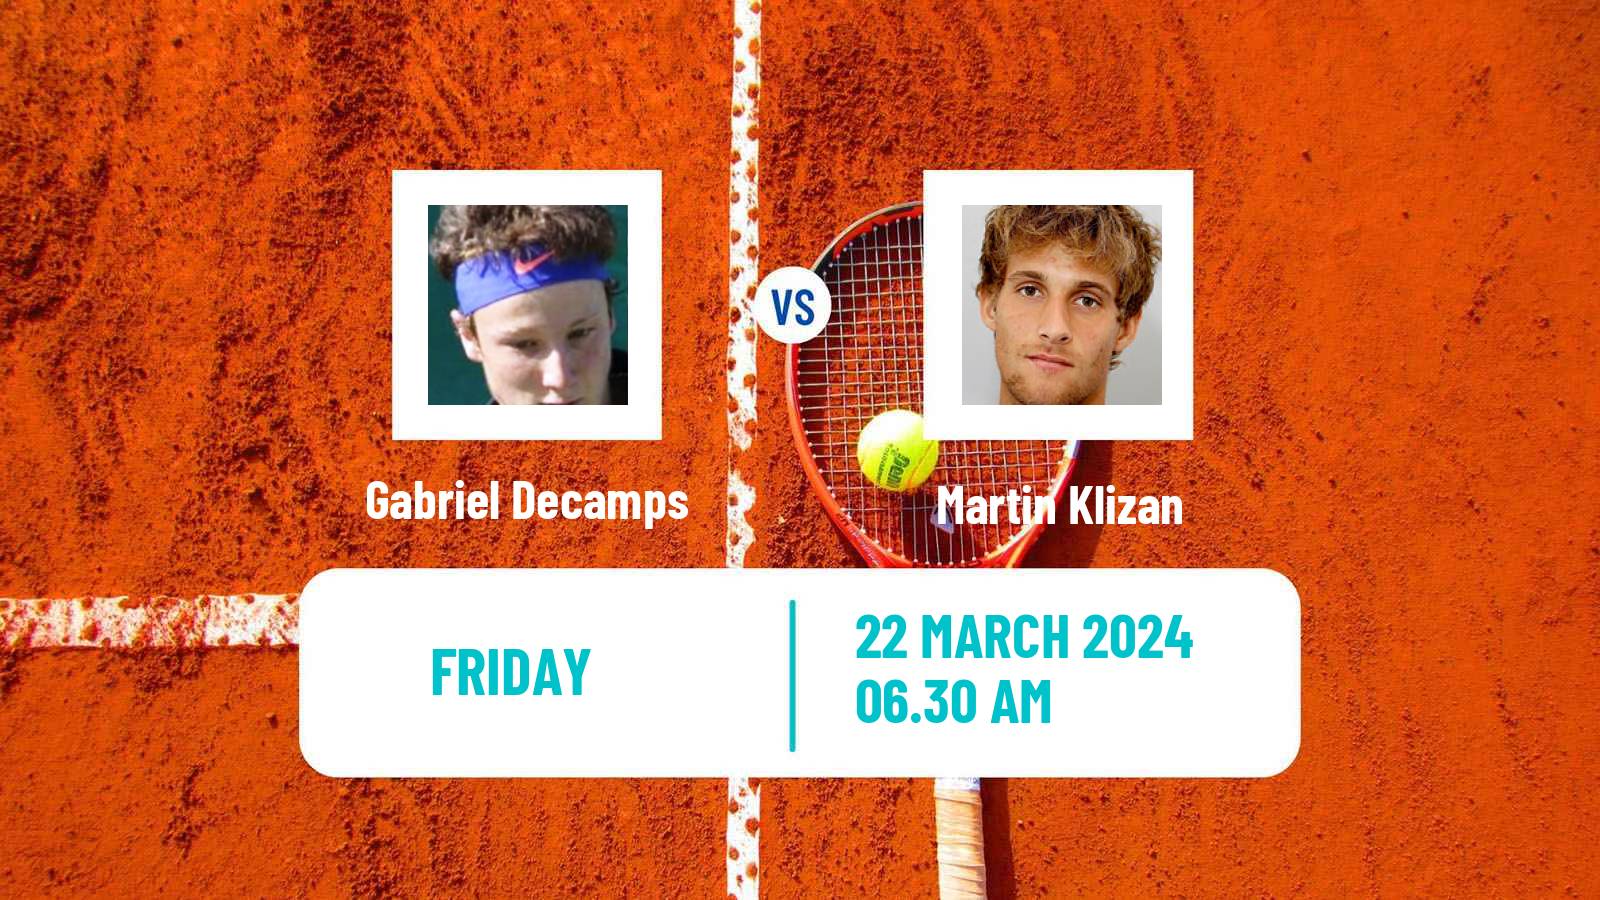 Tennis ITF M15 Heraklion 3 Men Gabriel Decamps - Martin Klizan